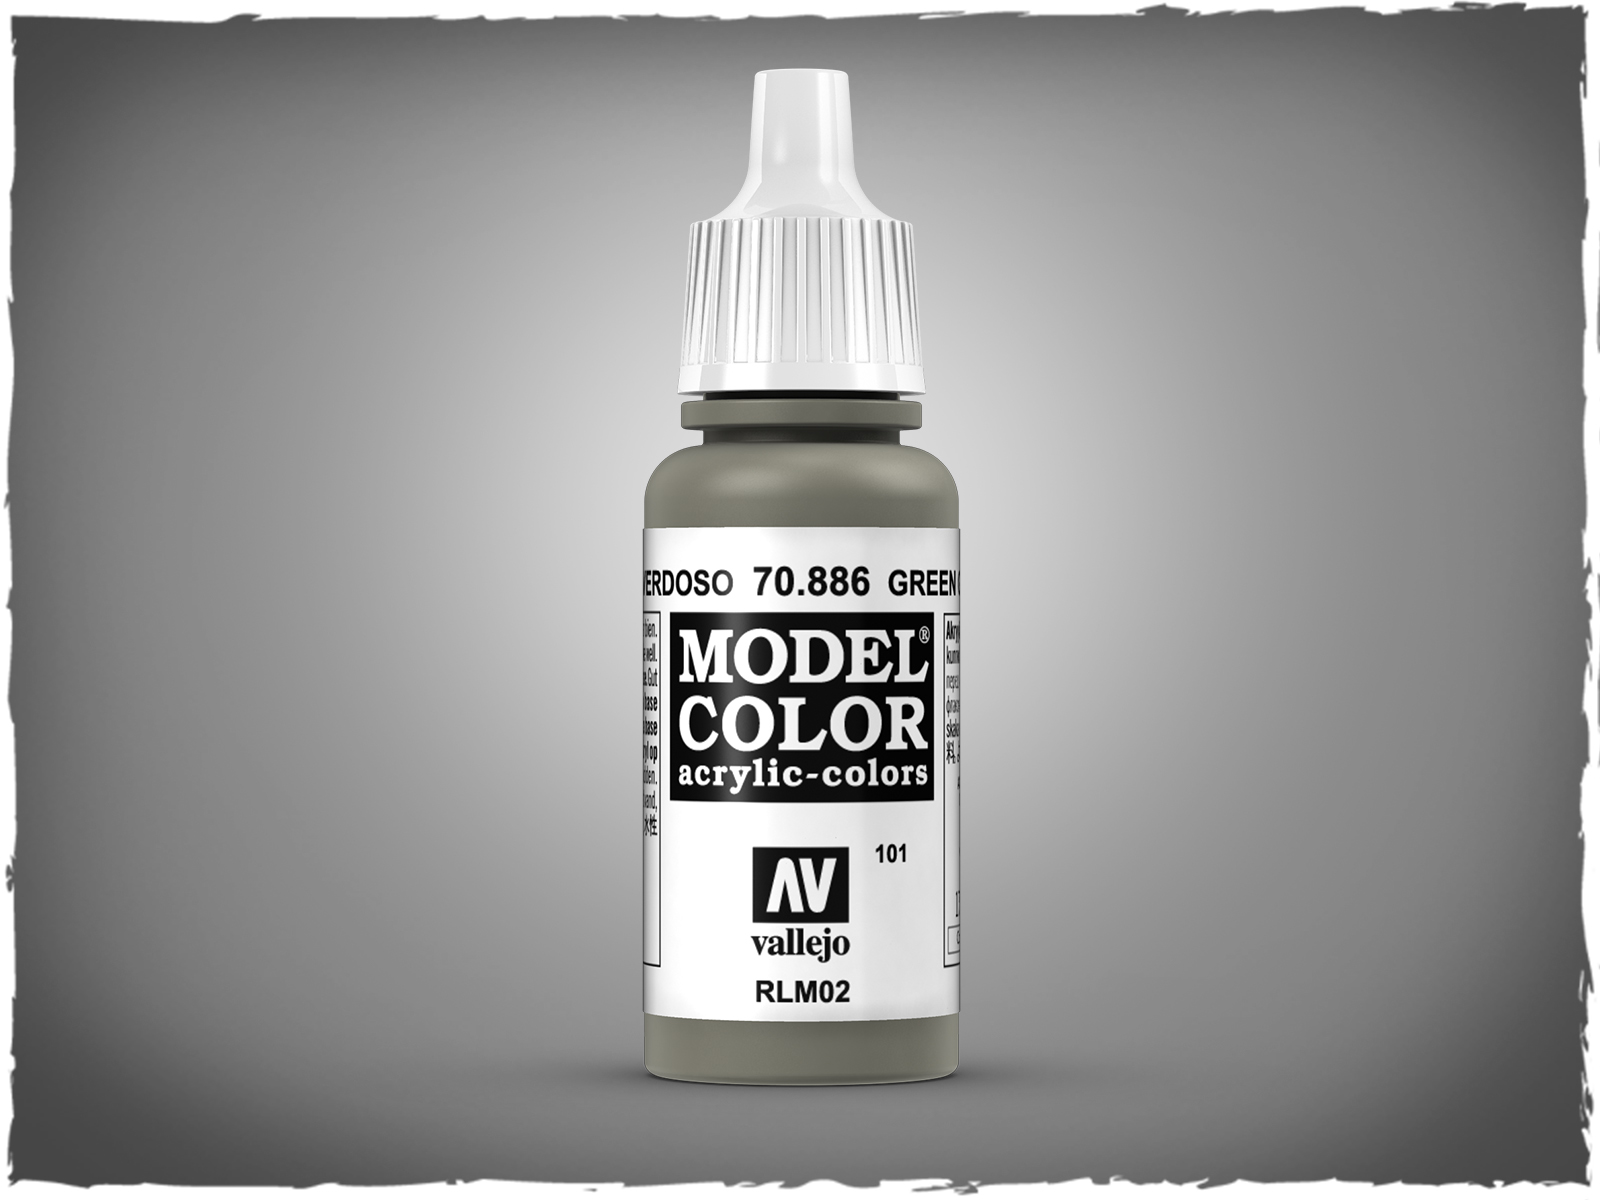 Vallejo Model Color 006. Light Flesh 70928 / FS 31670 - MODEL COLOR -  Single paints - Vallejo - Paints - Sklep Modelarski Agtom